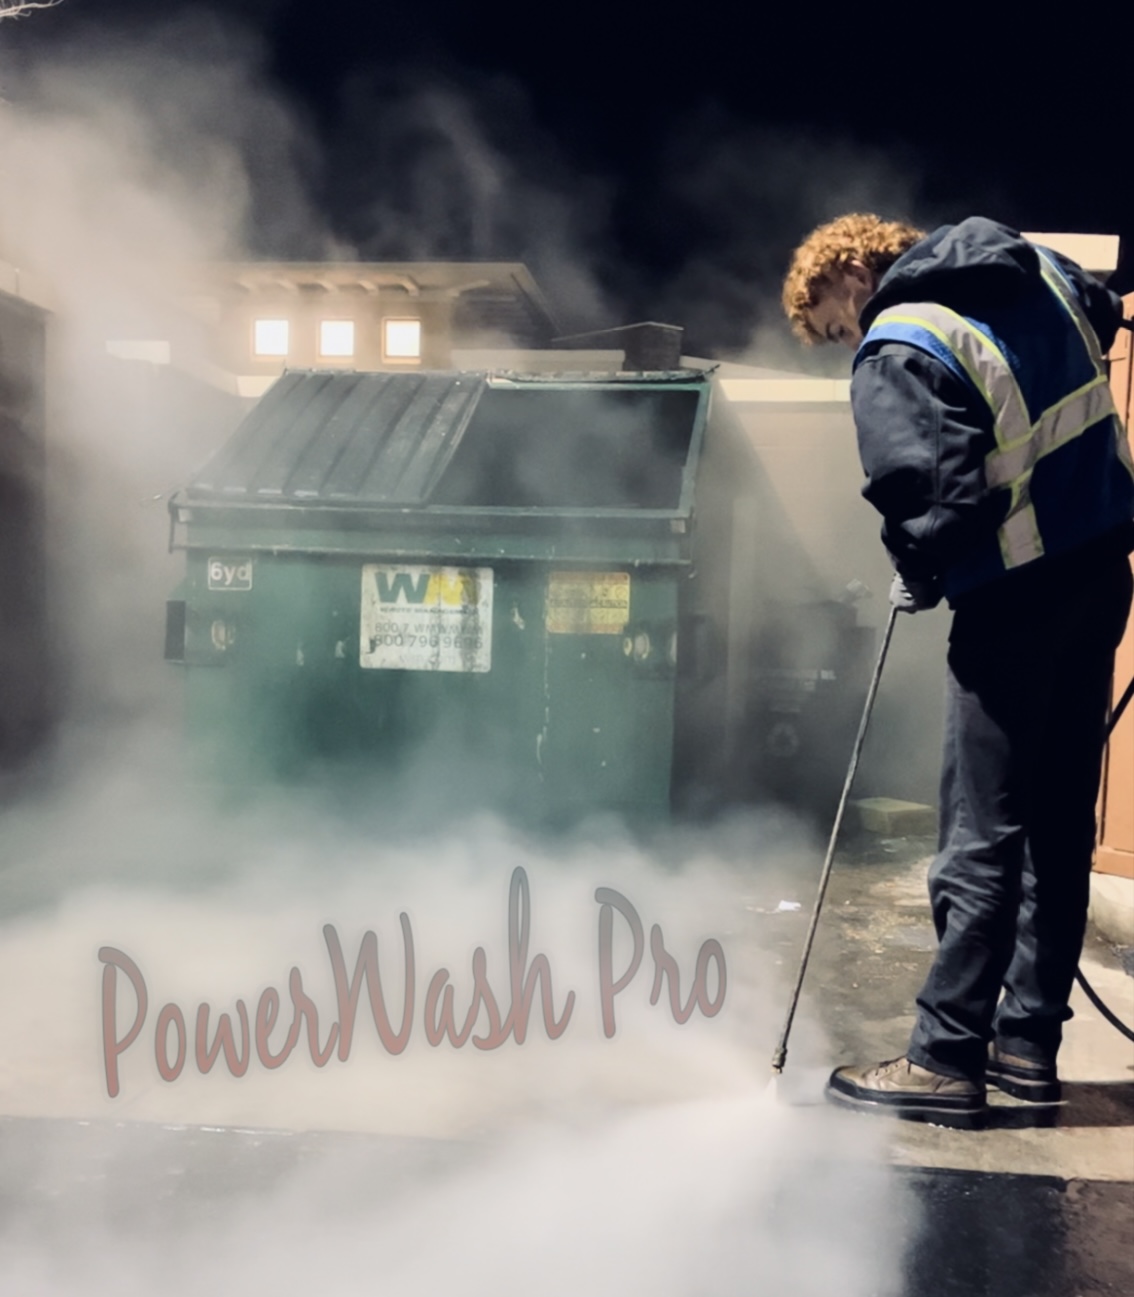 PowerWash Pro dumpster cleaning